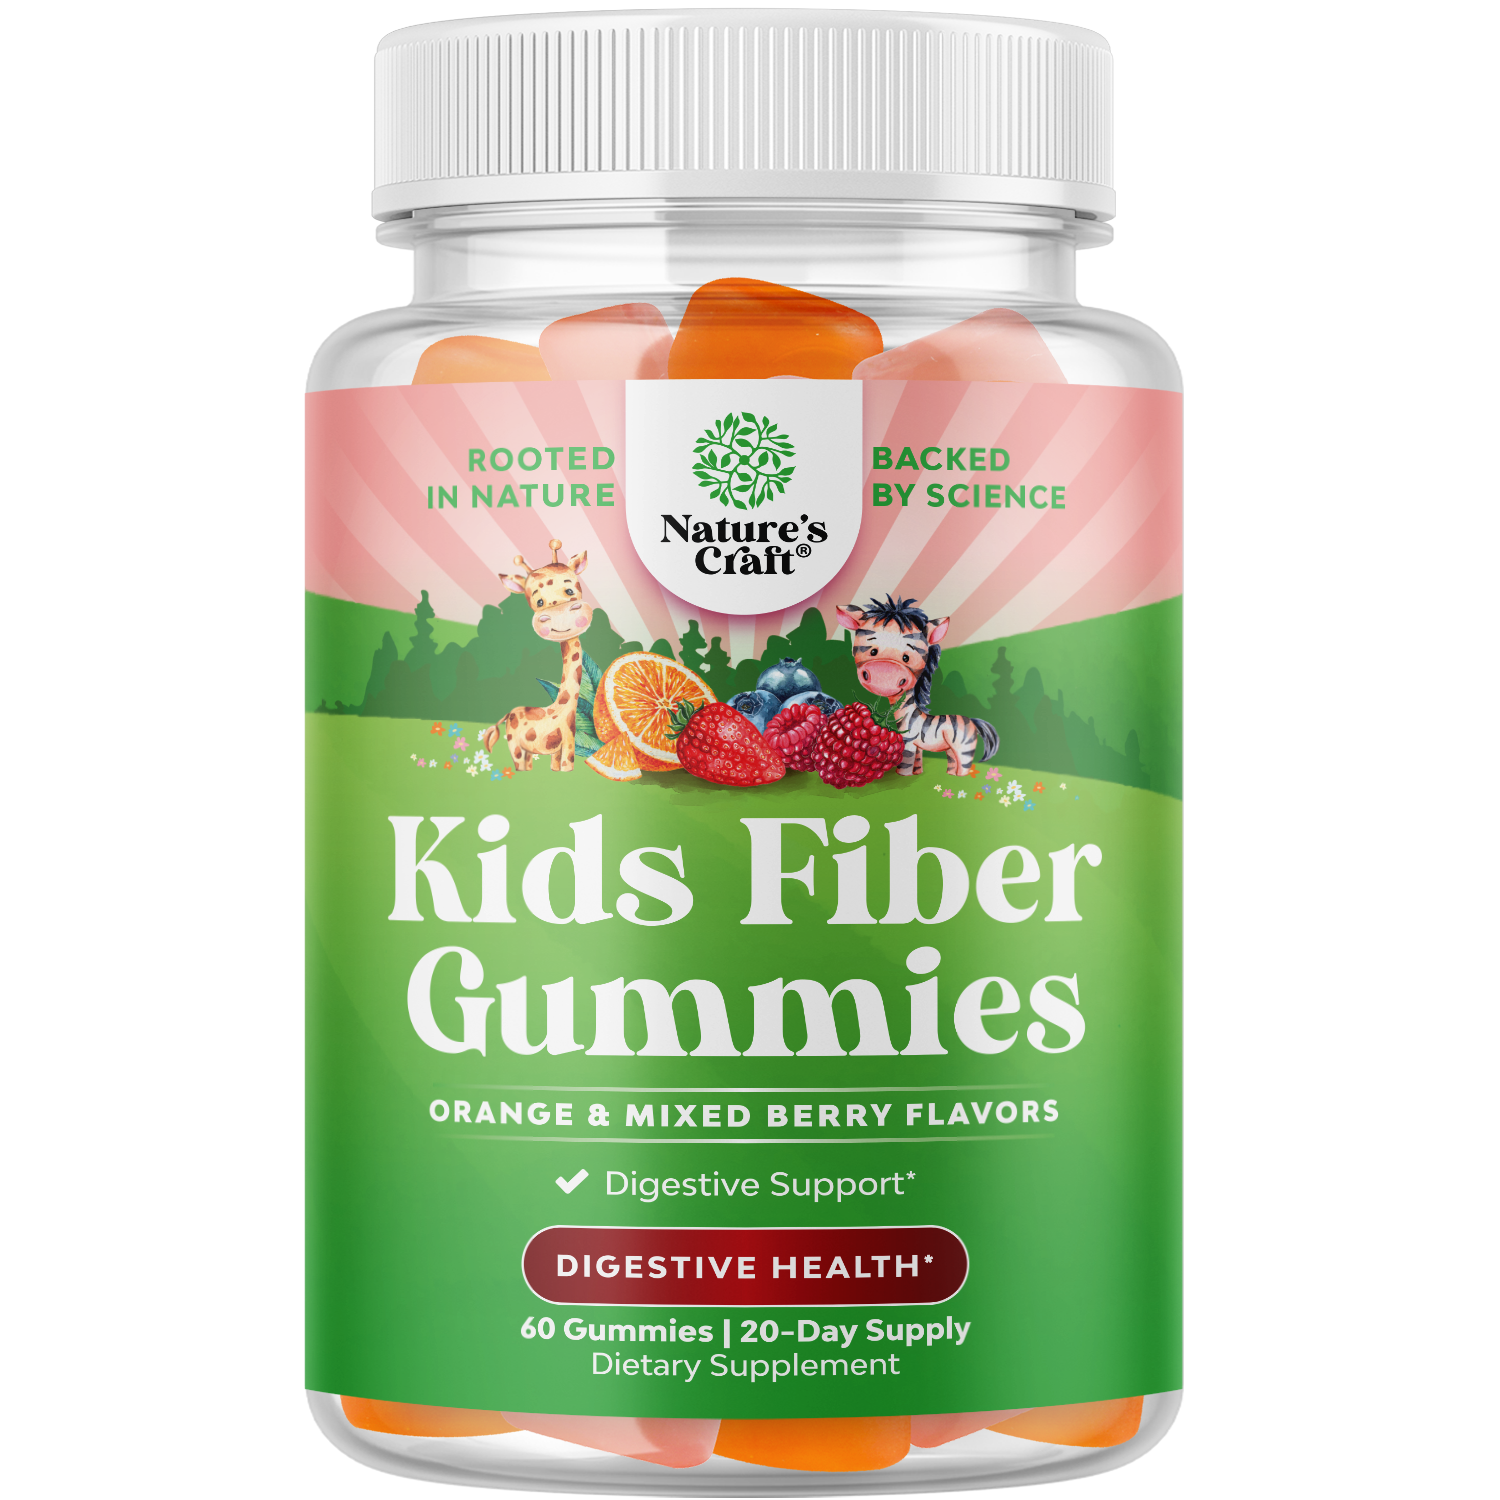 Kids Fiber Gummies